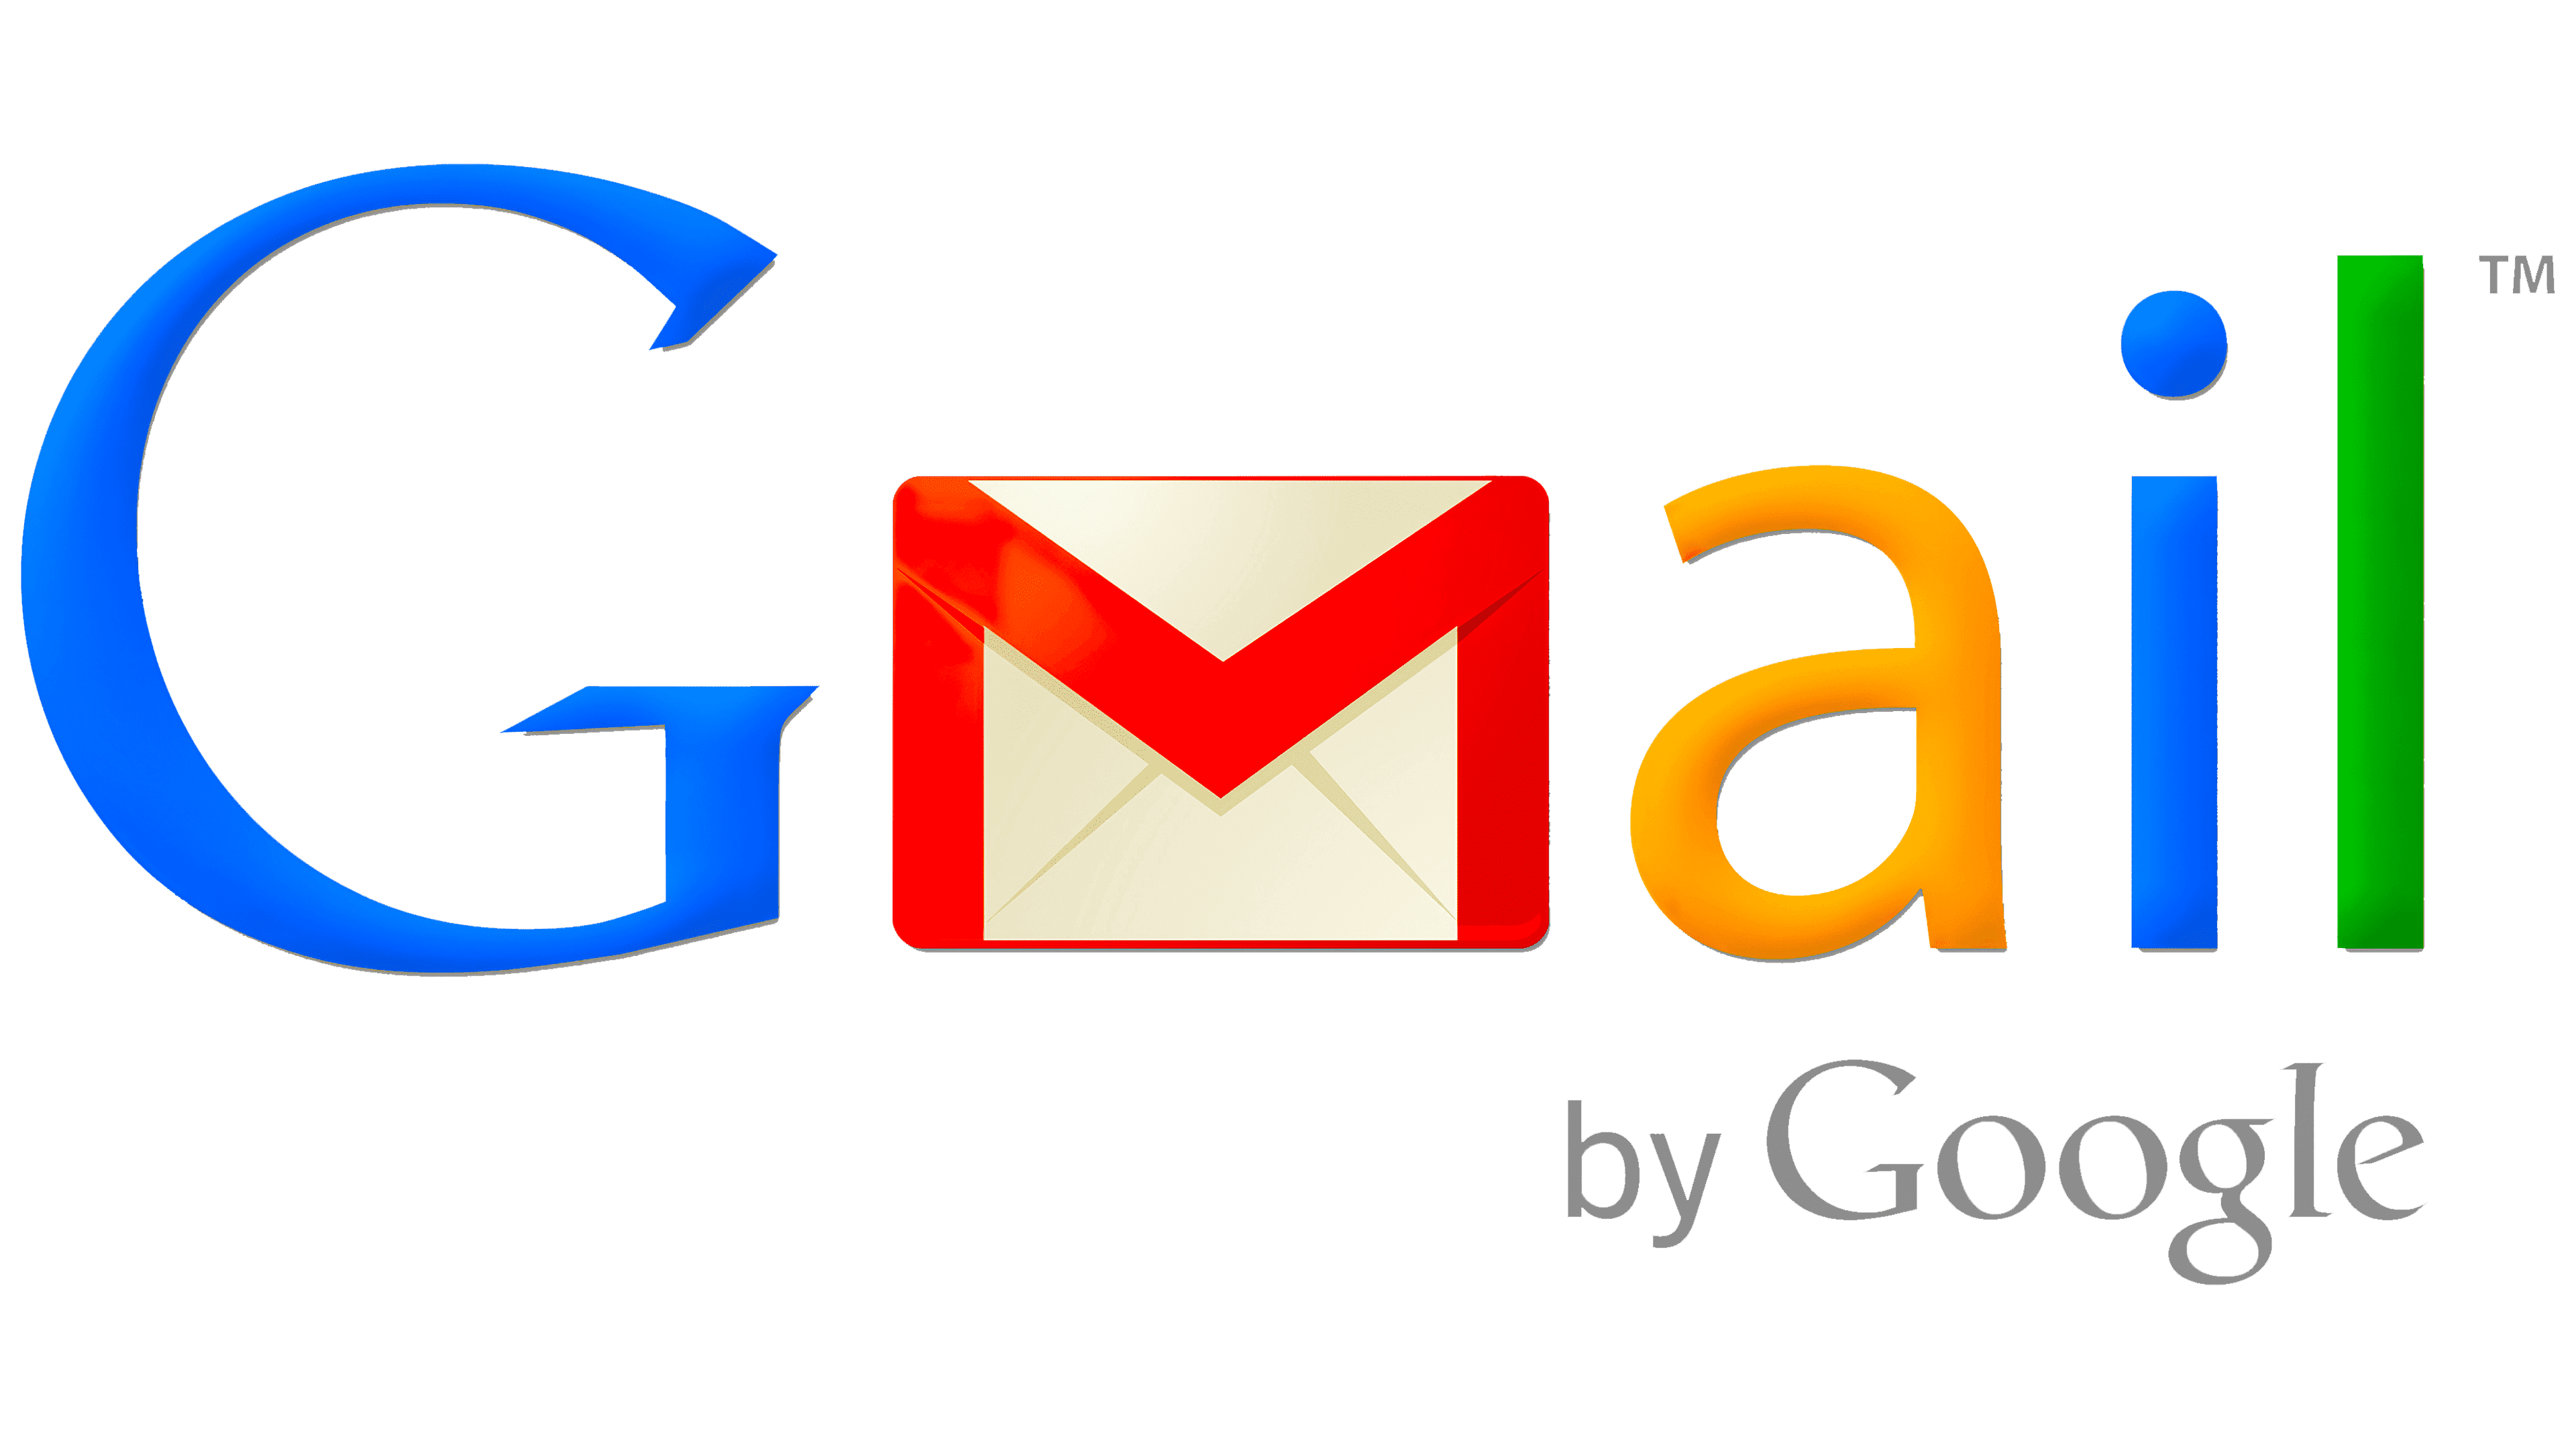 15 gmail com. Гмаил. Гугл почта. Gmail картинка. Гугл почта картинка.